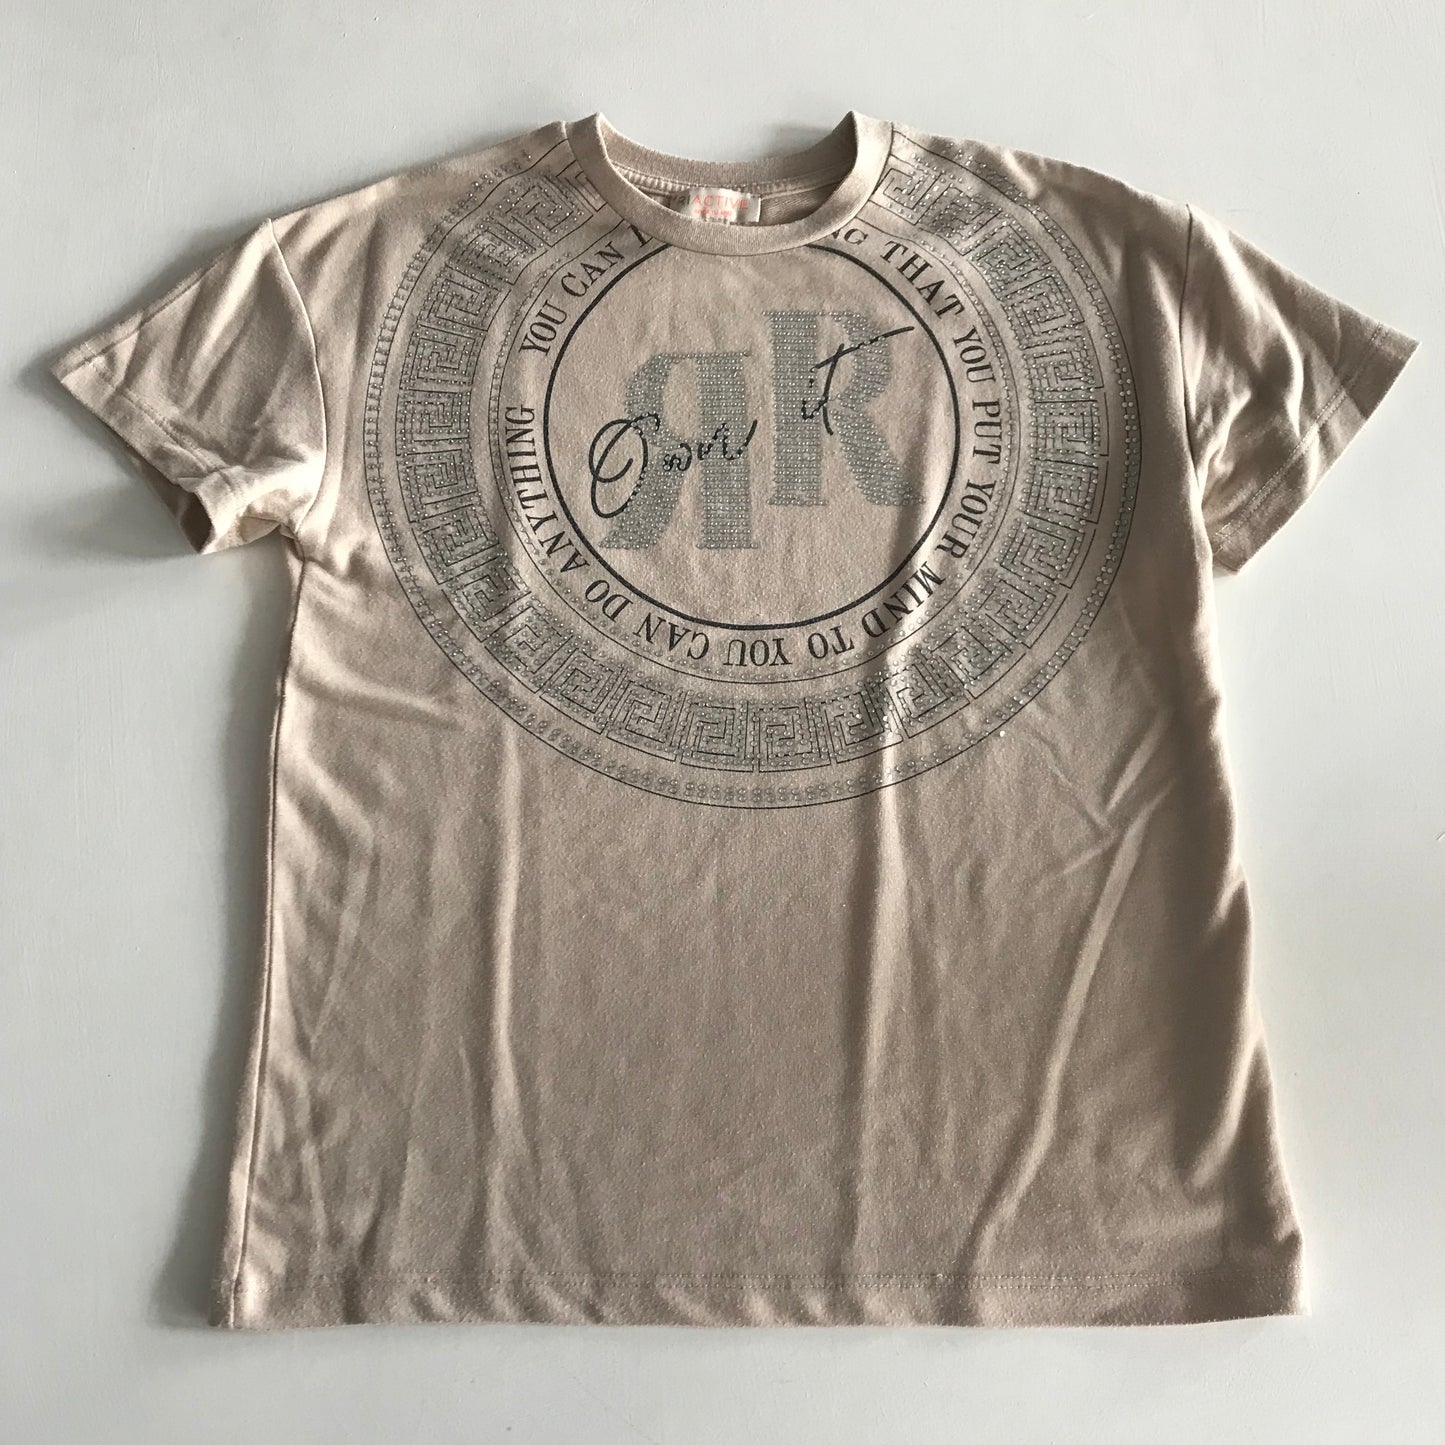 T-shirt - River Island - Age 7